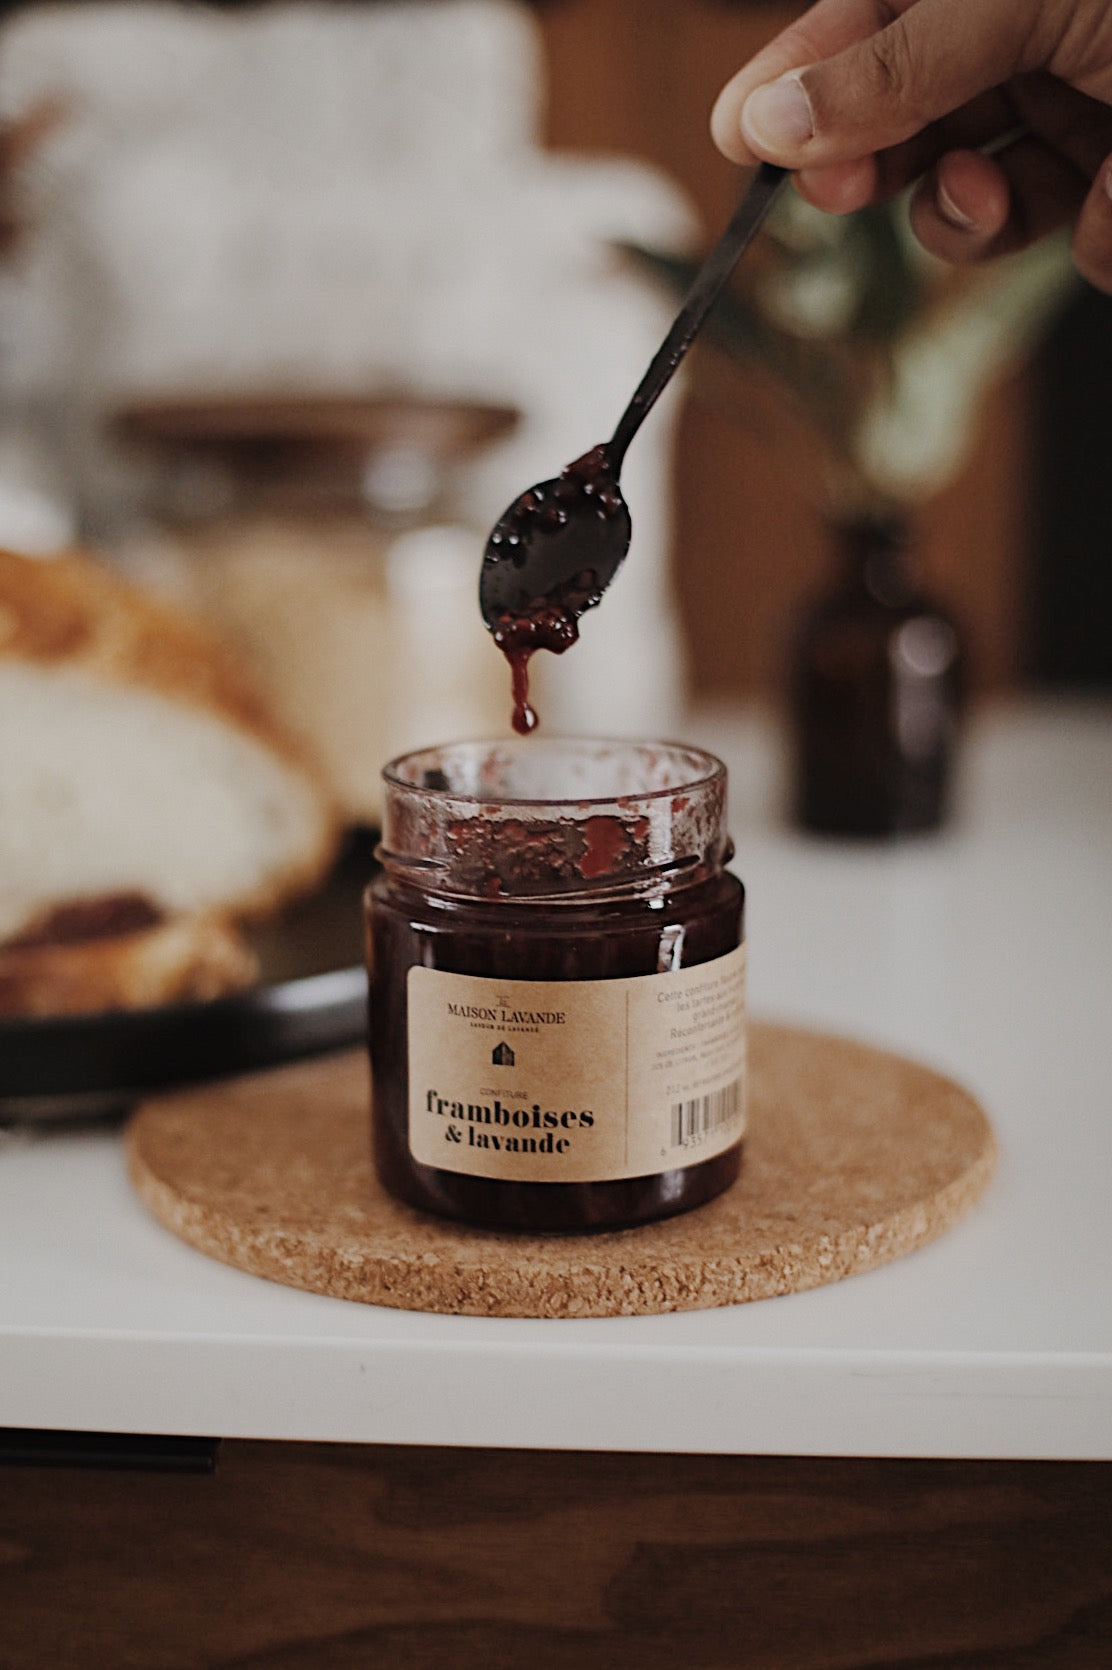 Confiture framboises & lavande||Raspberry & lavender jam